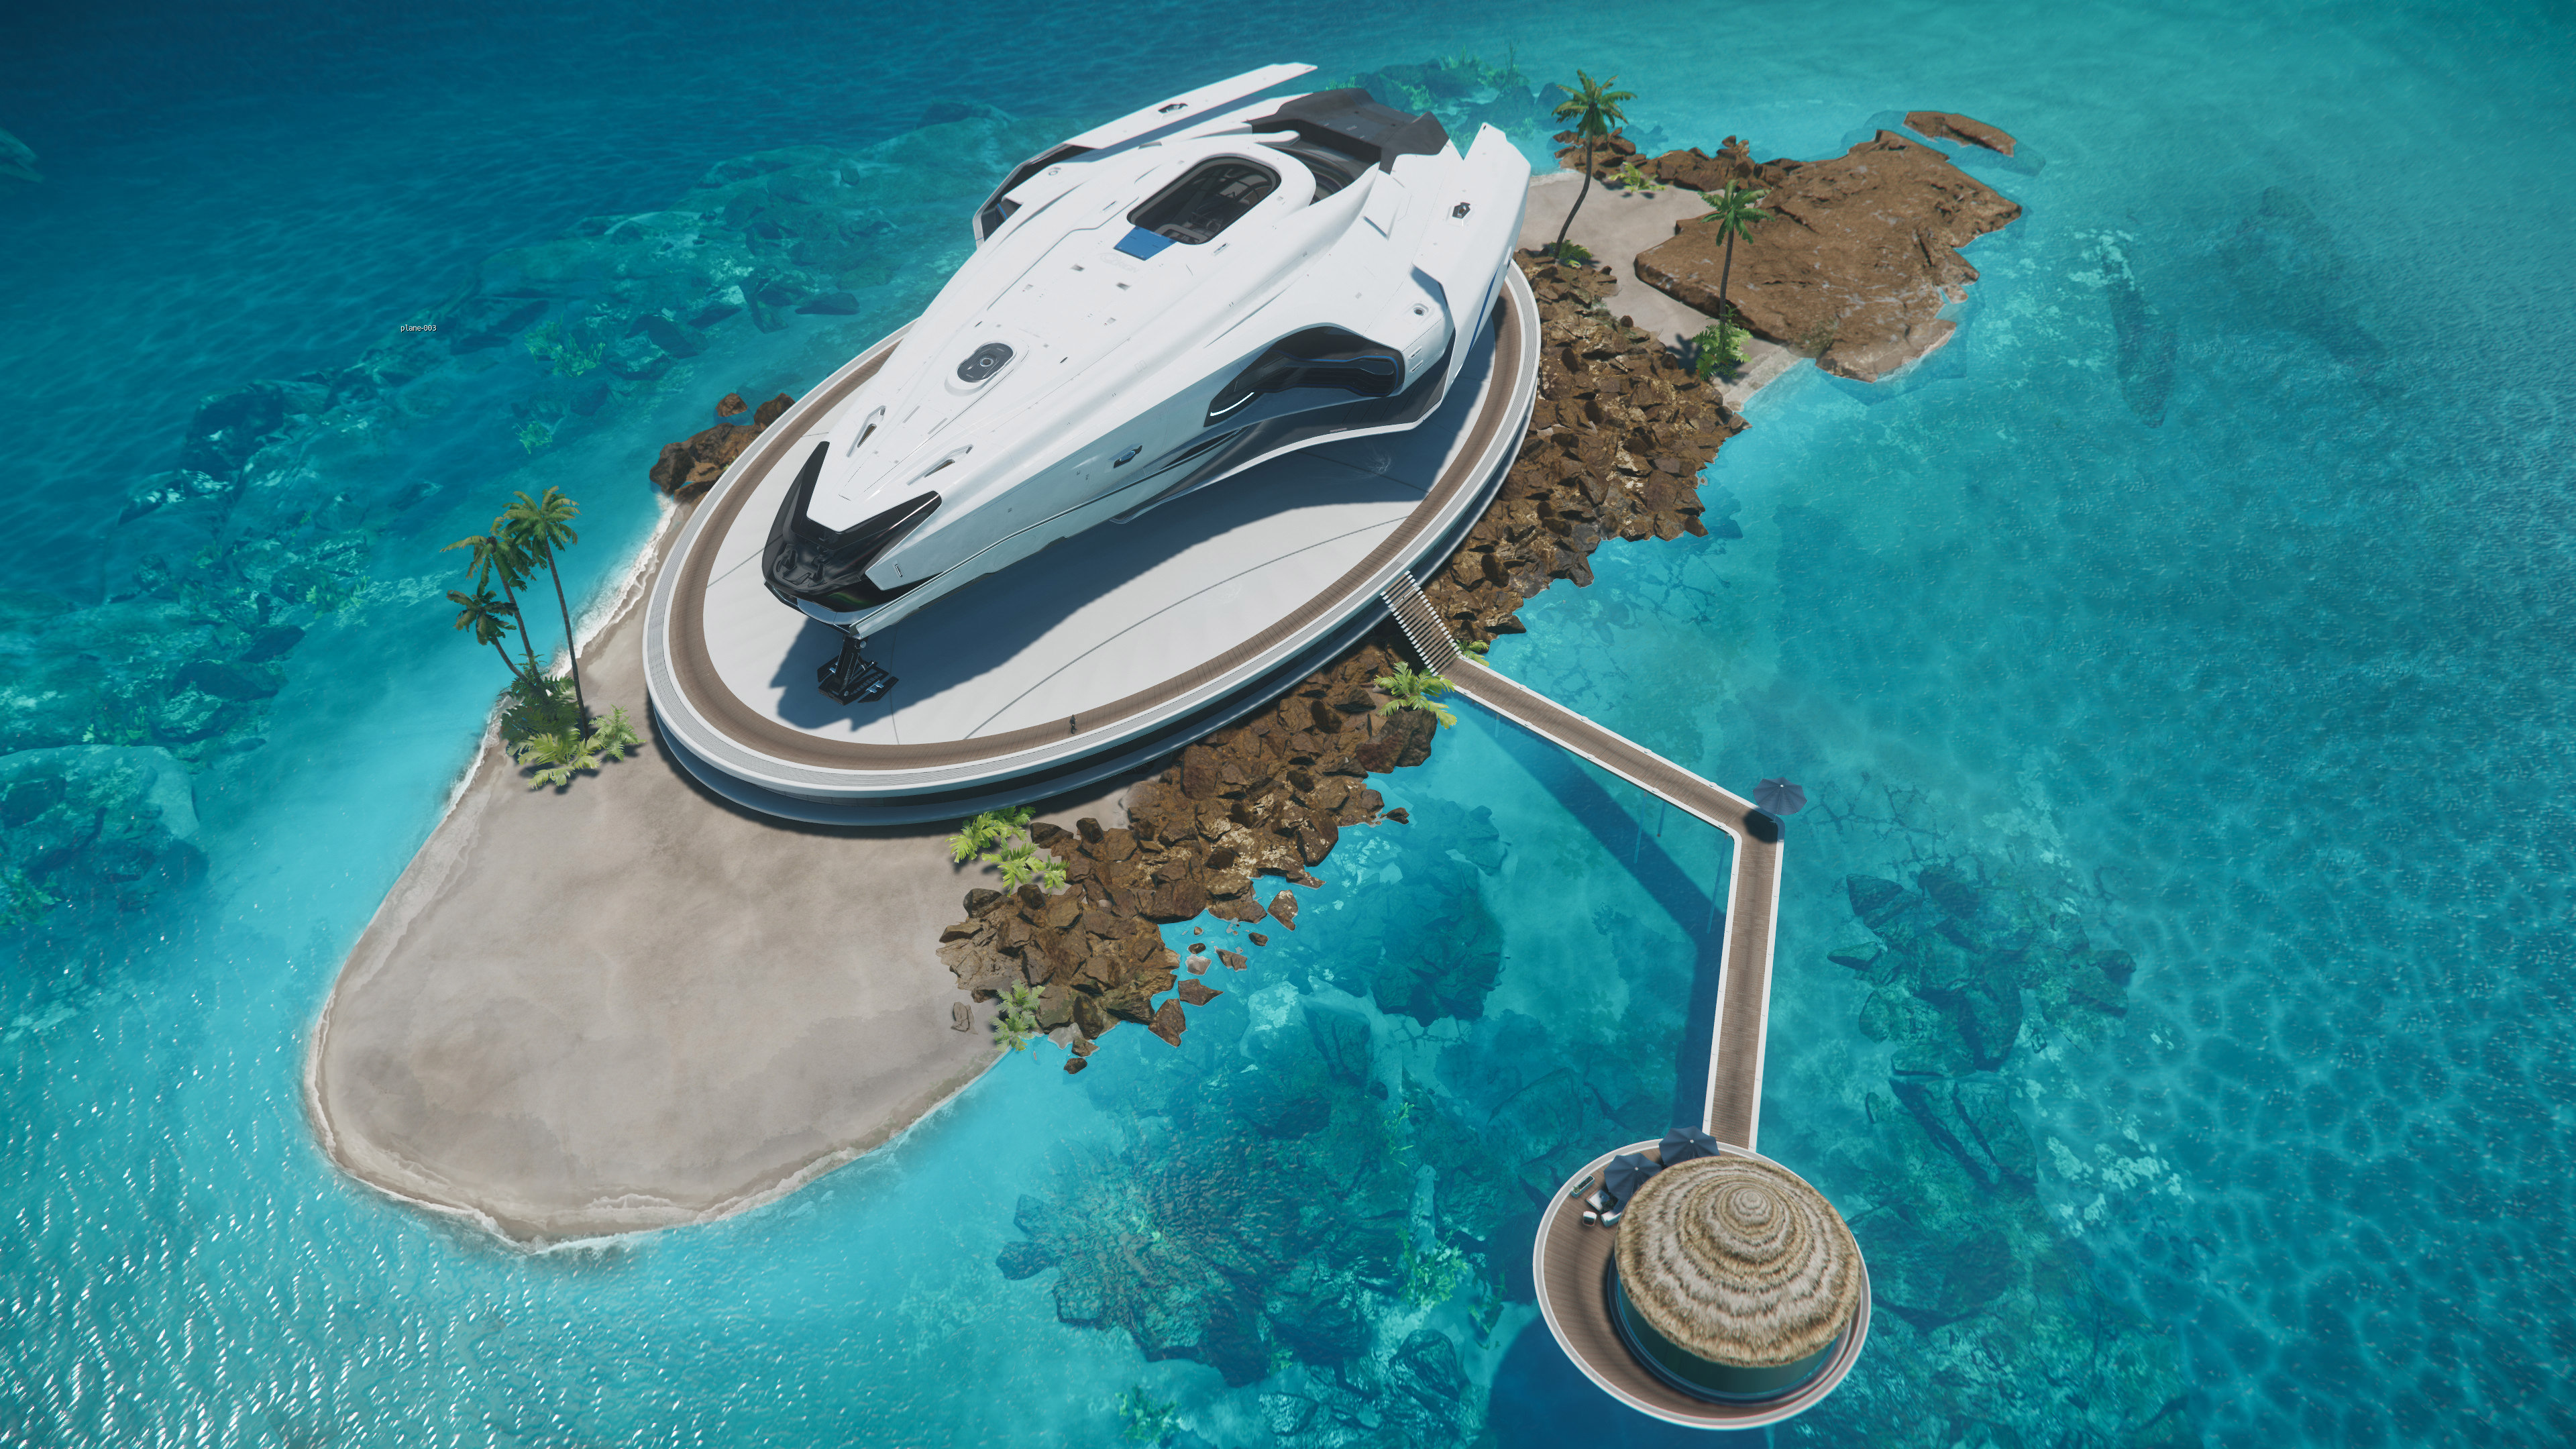 General 3840x2160 Star Citizen sea island spaceship science fiction digital art trees